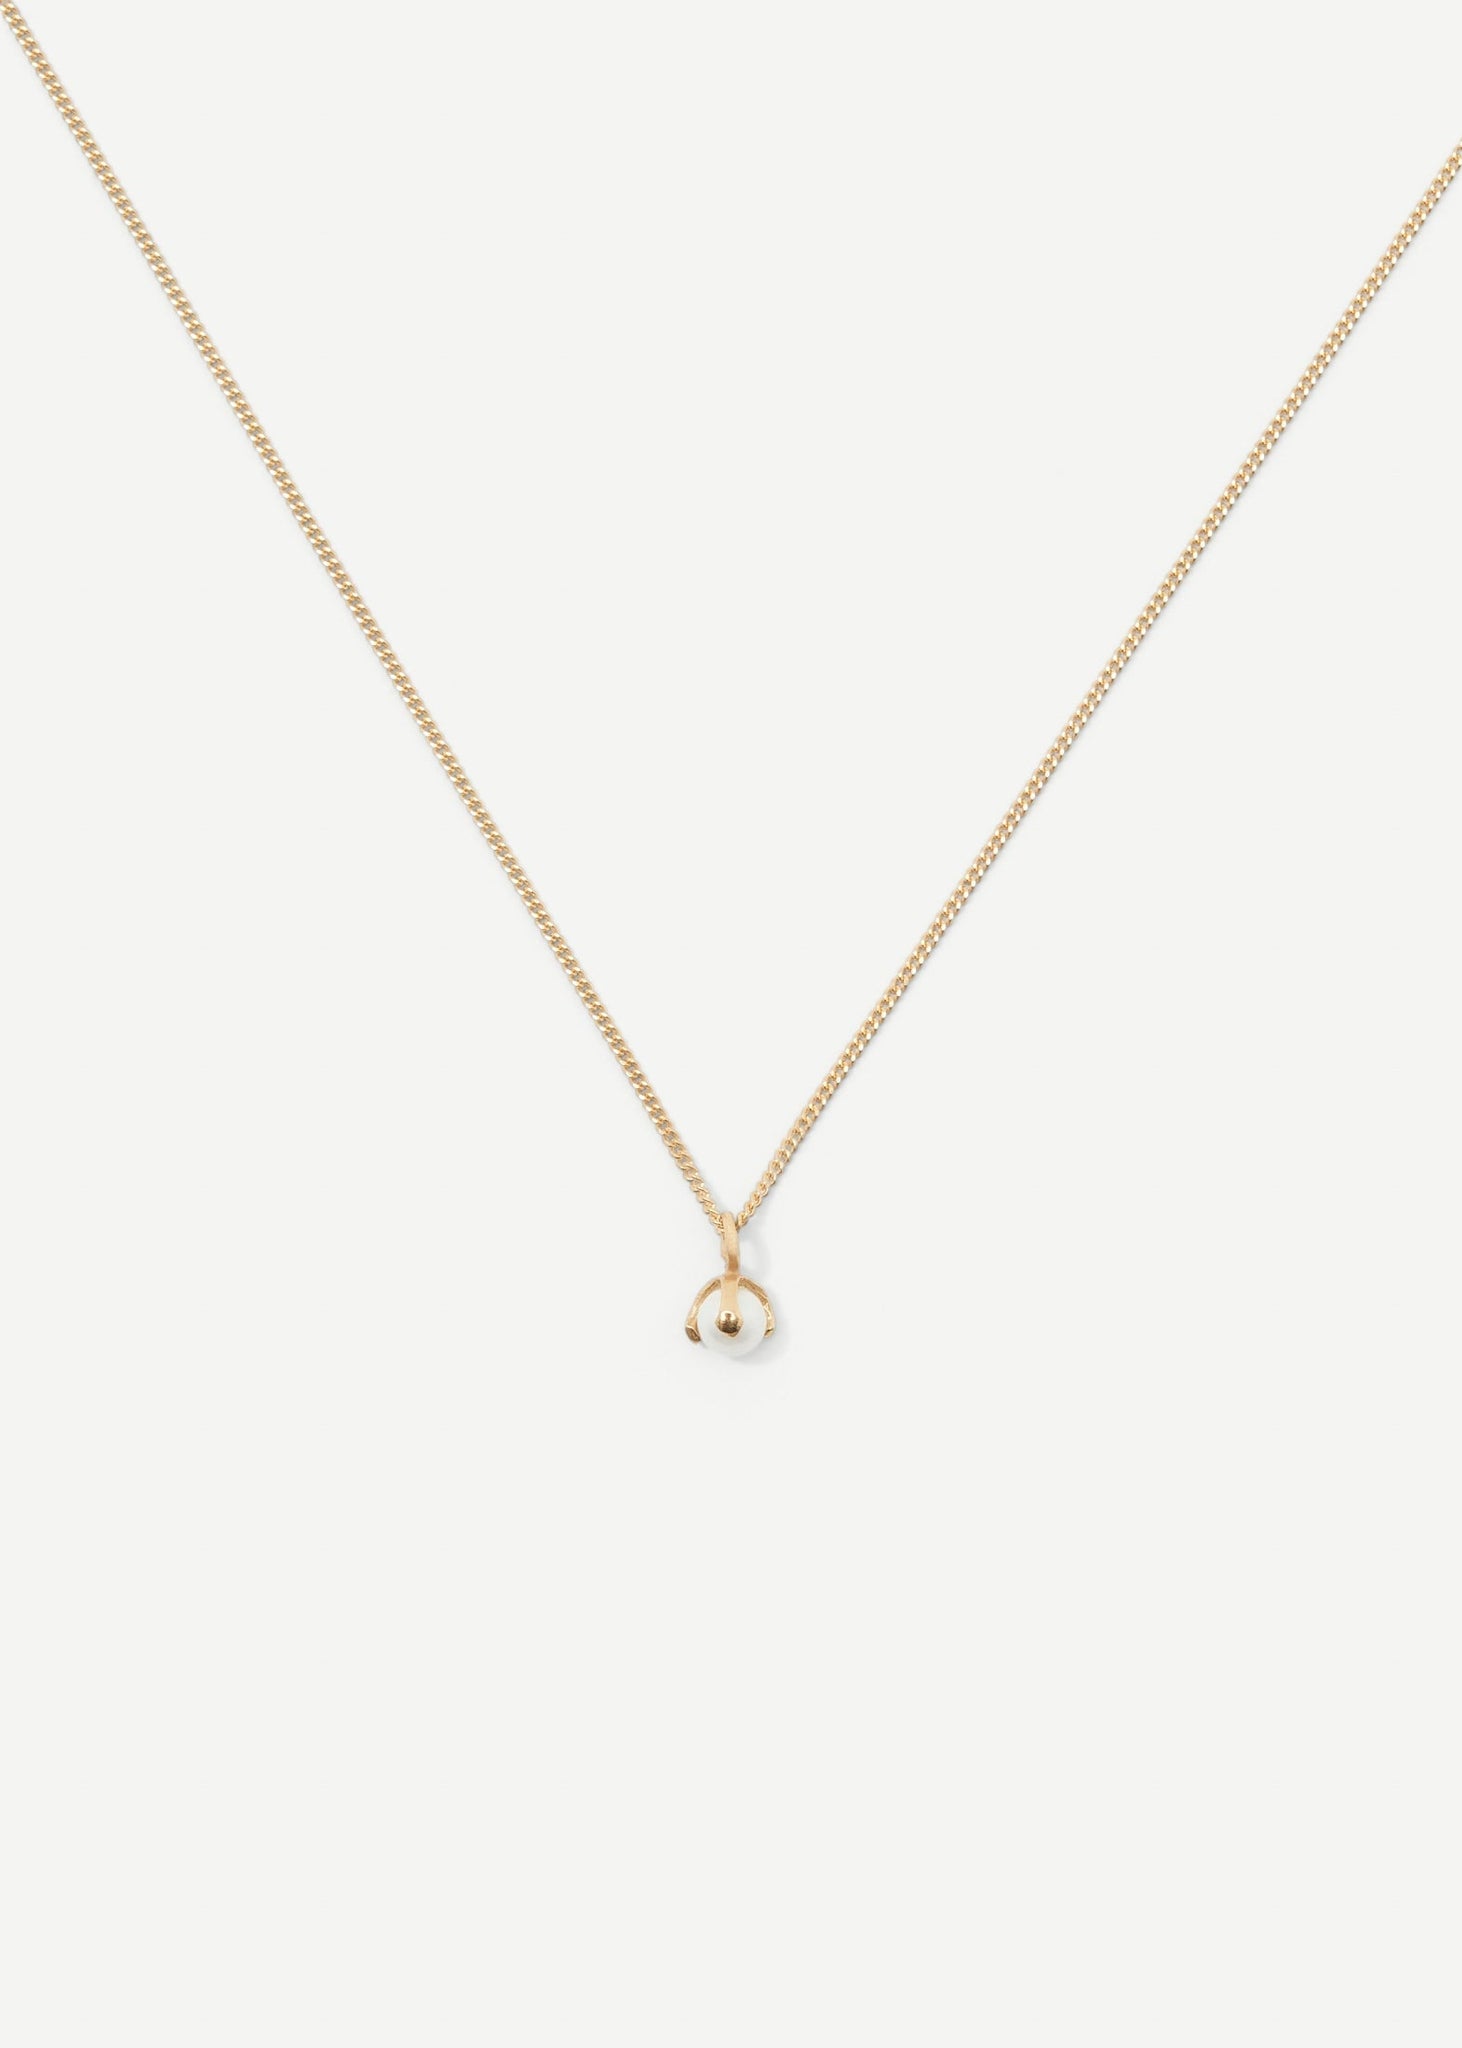 Pearled Necklace S - Cornelia Webb - 2